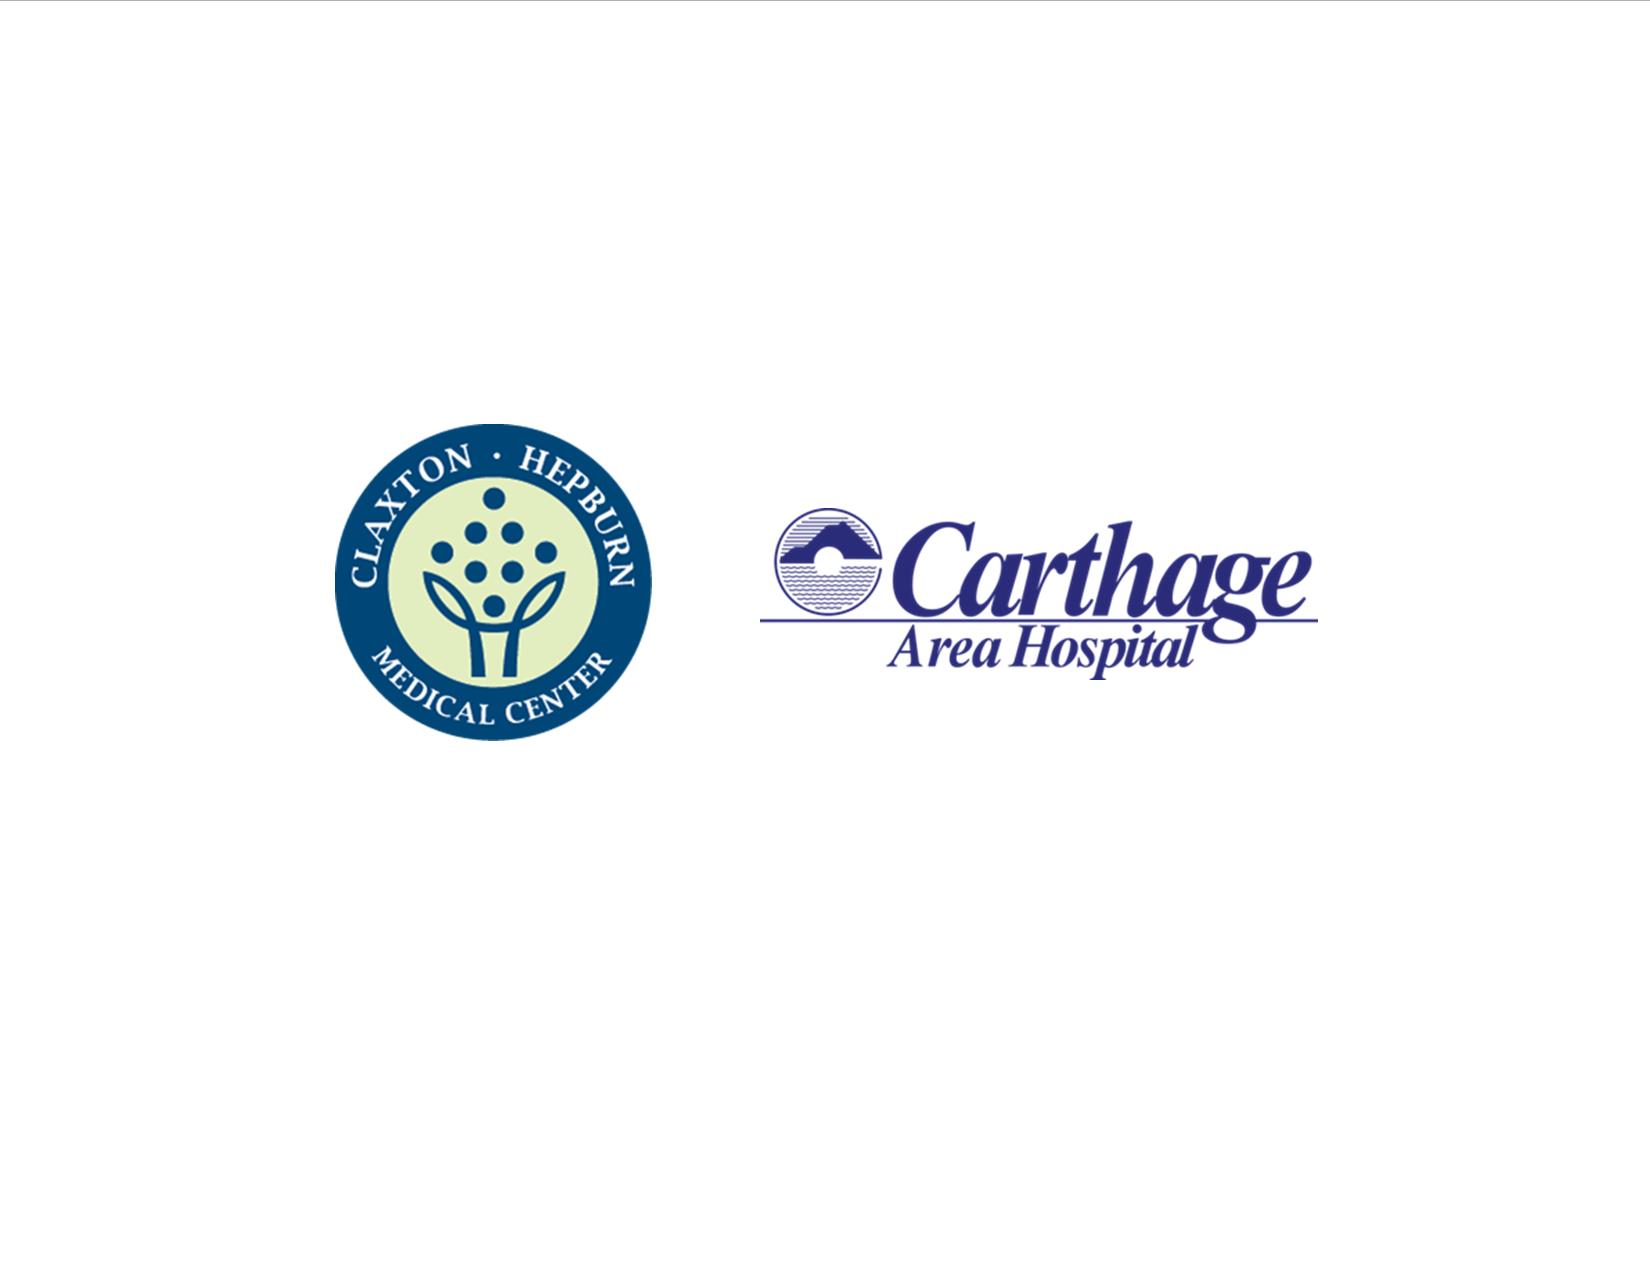 Carthage Area Hospital logo and Claxton Hepburn Medical Center logo